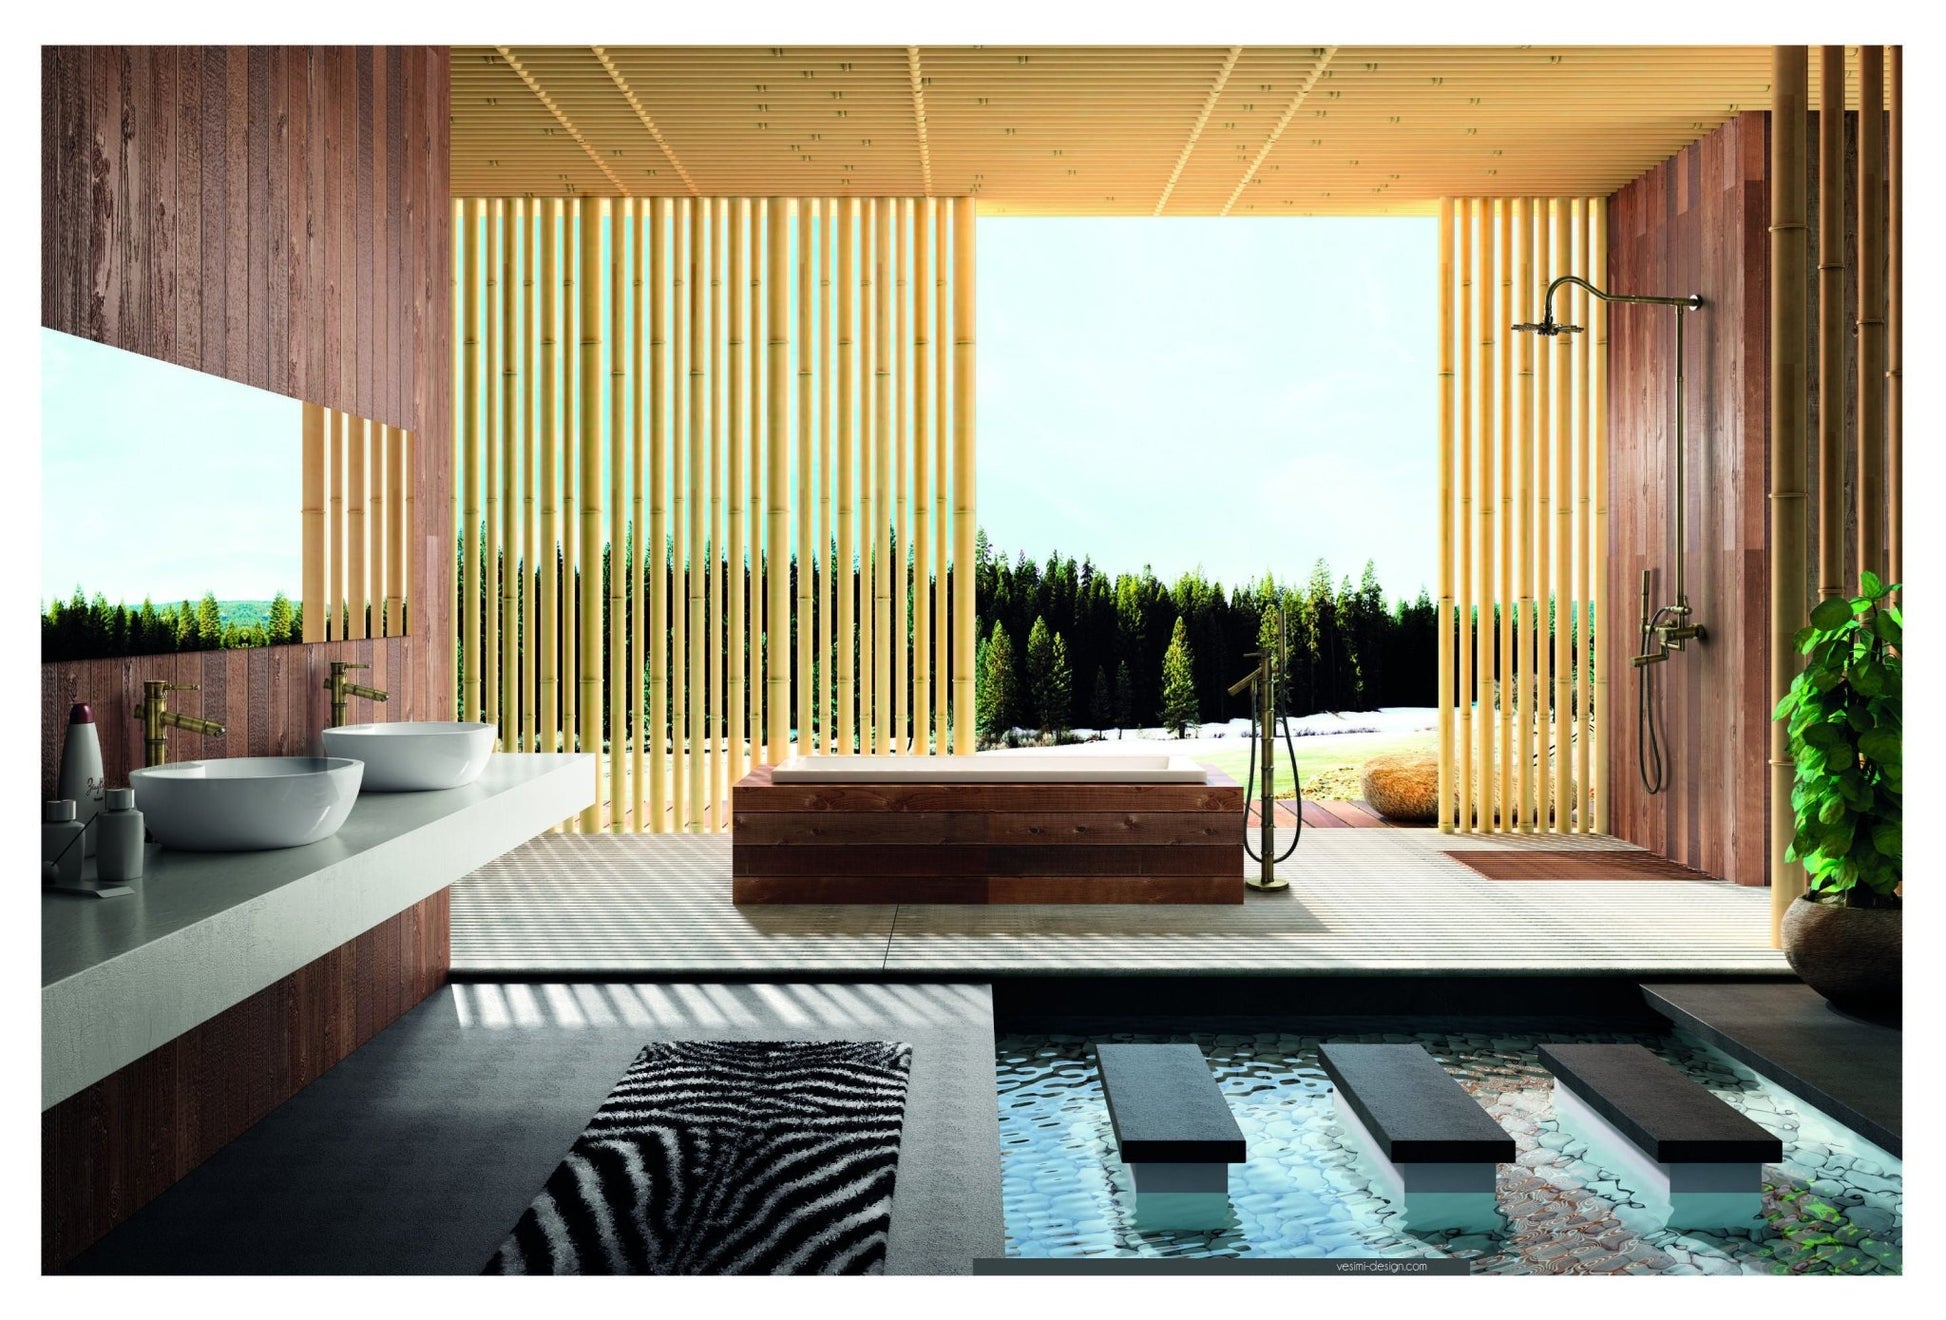 Bamboo Bronze Large Rack Towel Holder - |VESIMI Design| Luxury and Rustic bathrooms online